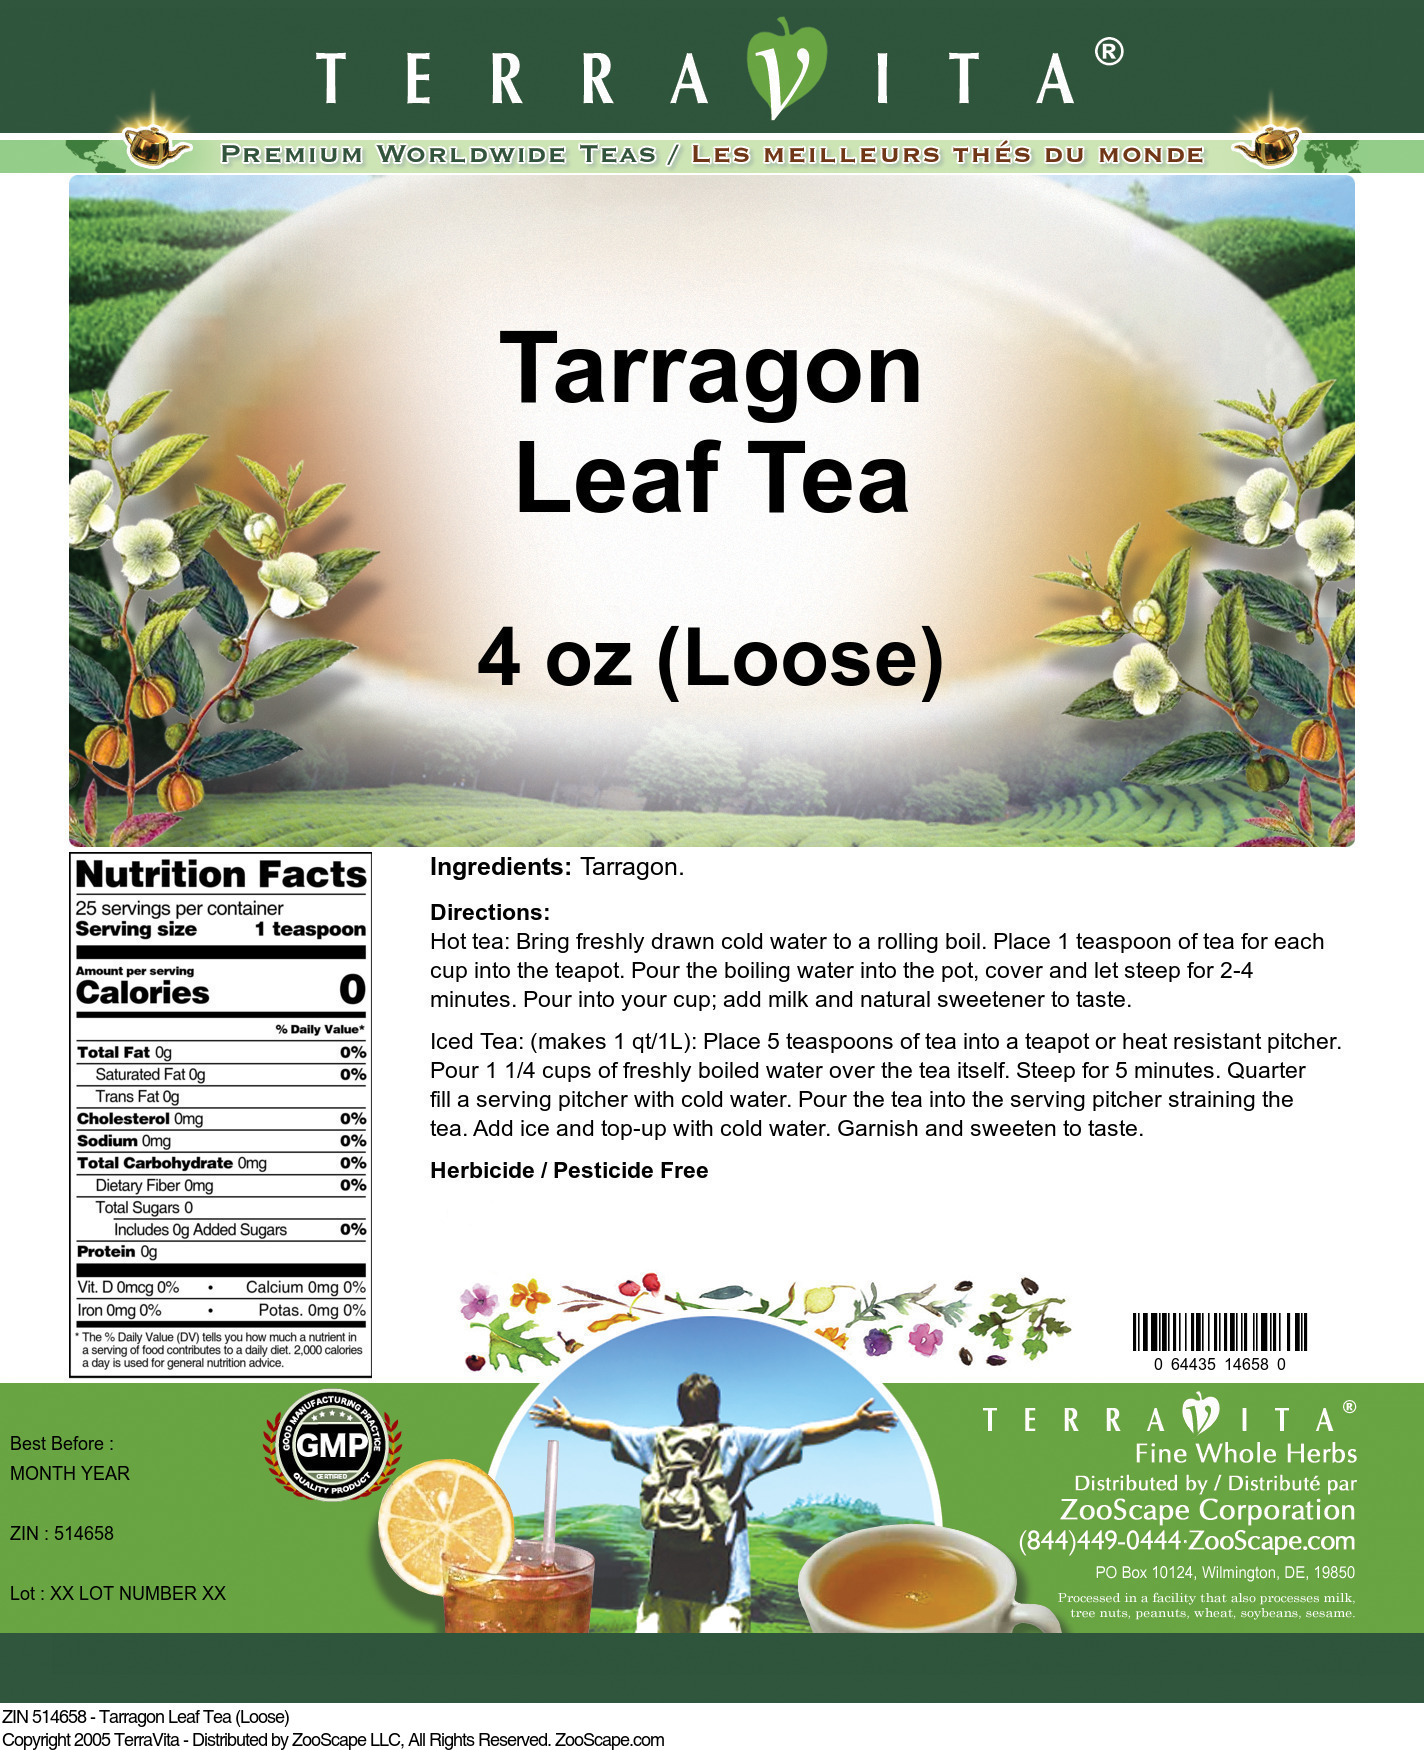 Tarragon Leaf Tea (Loose) - Label